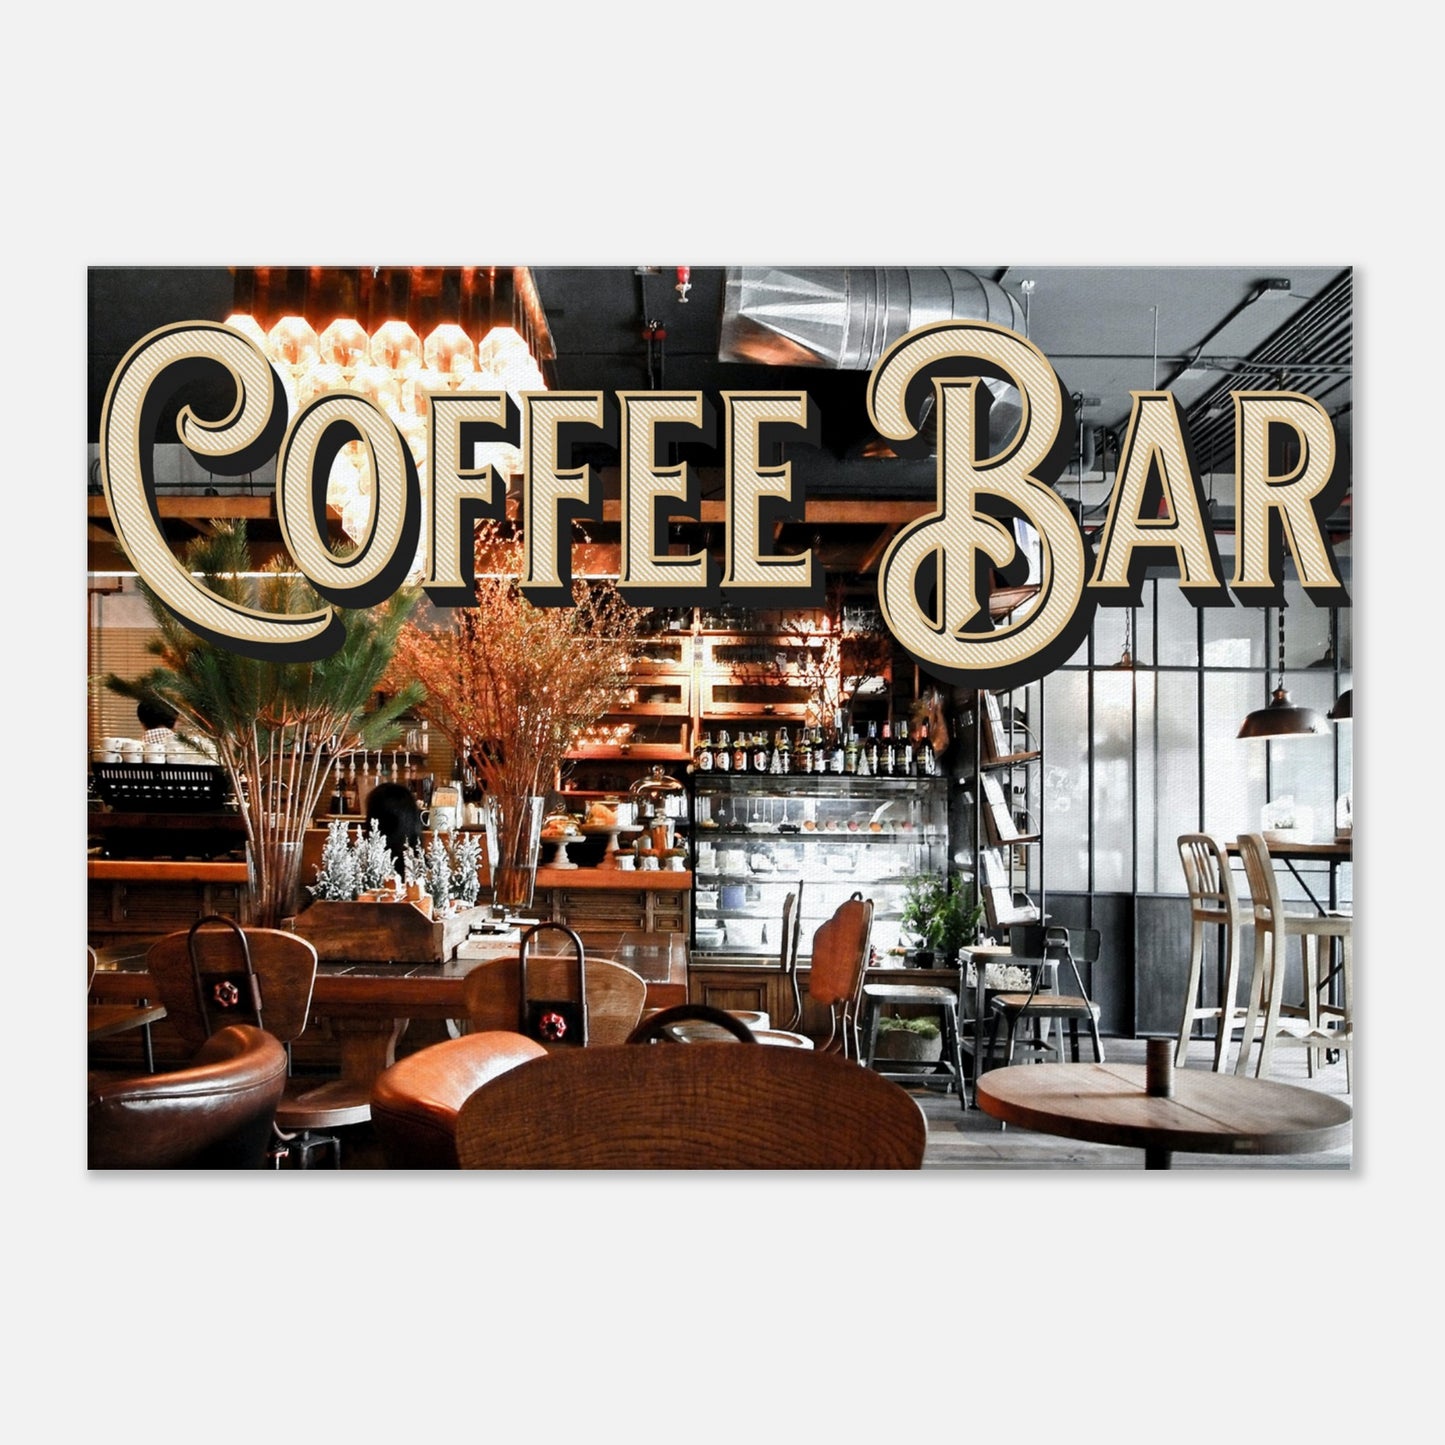 Downtown Coffee Bar Canvas Wall Print on Java Good Coffee